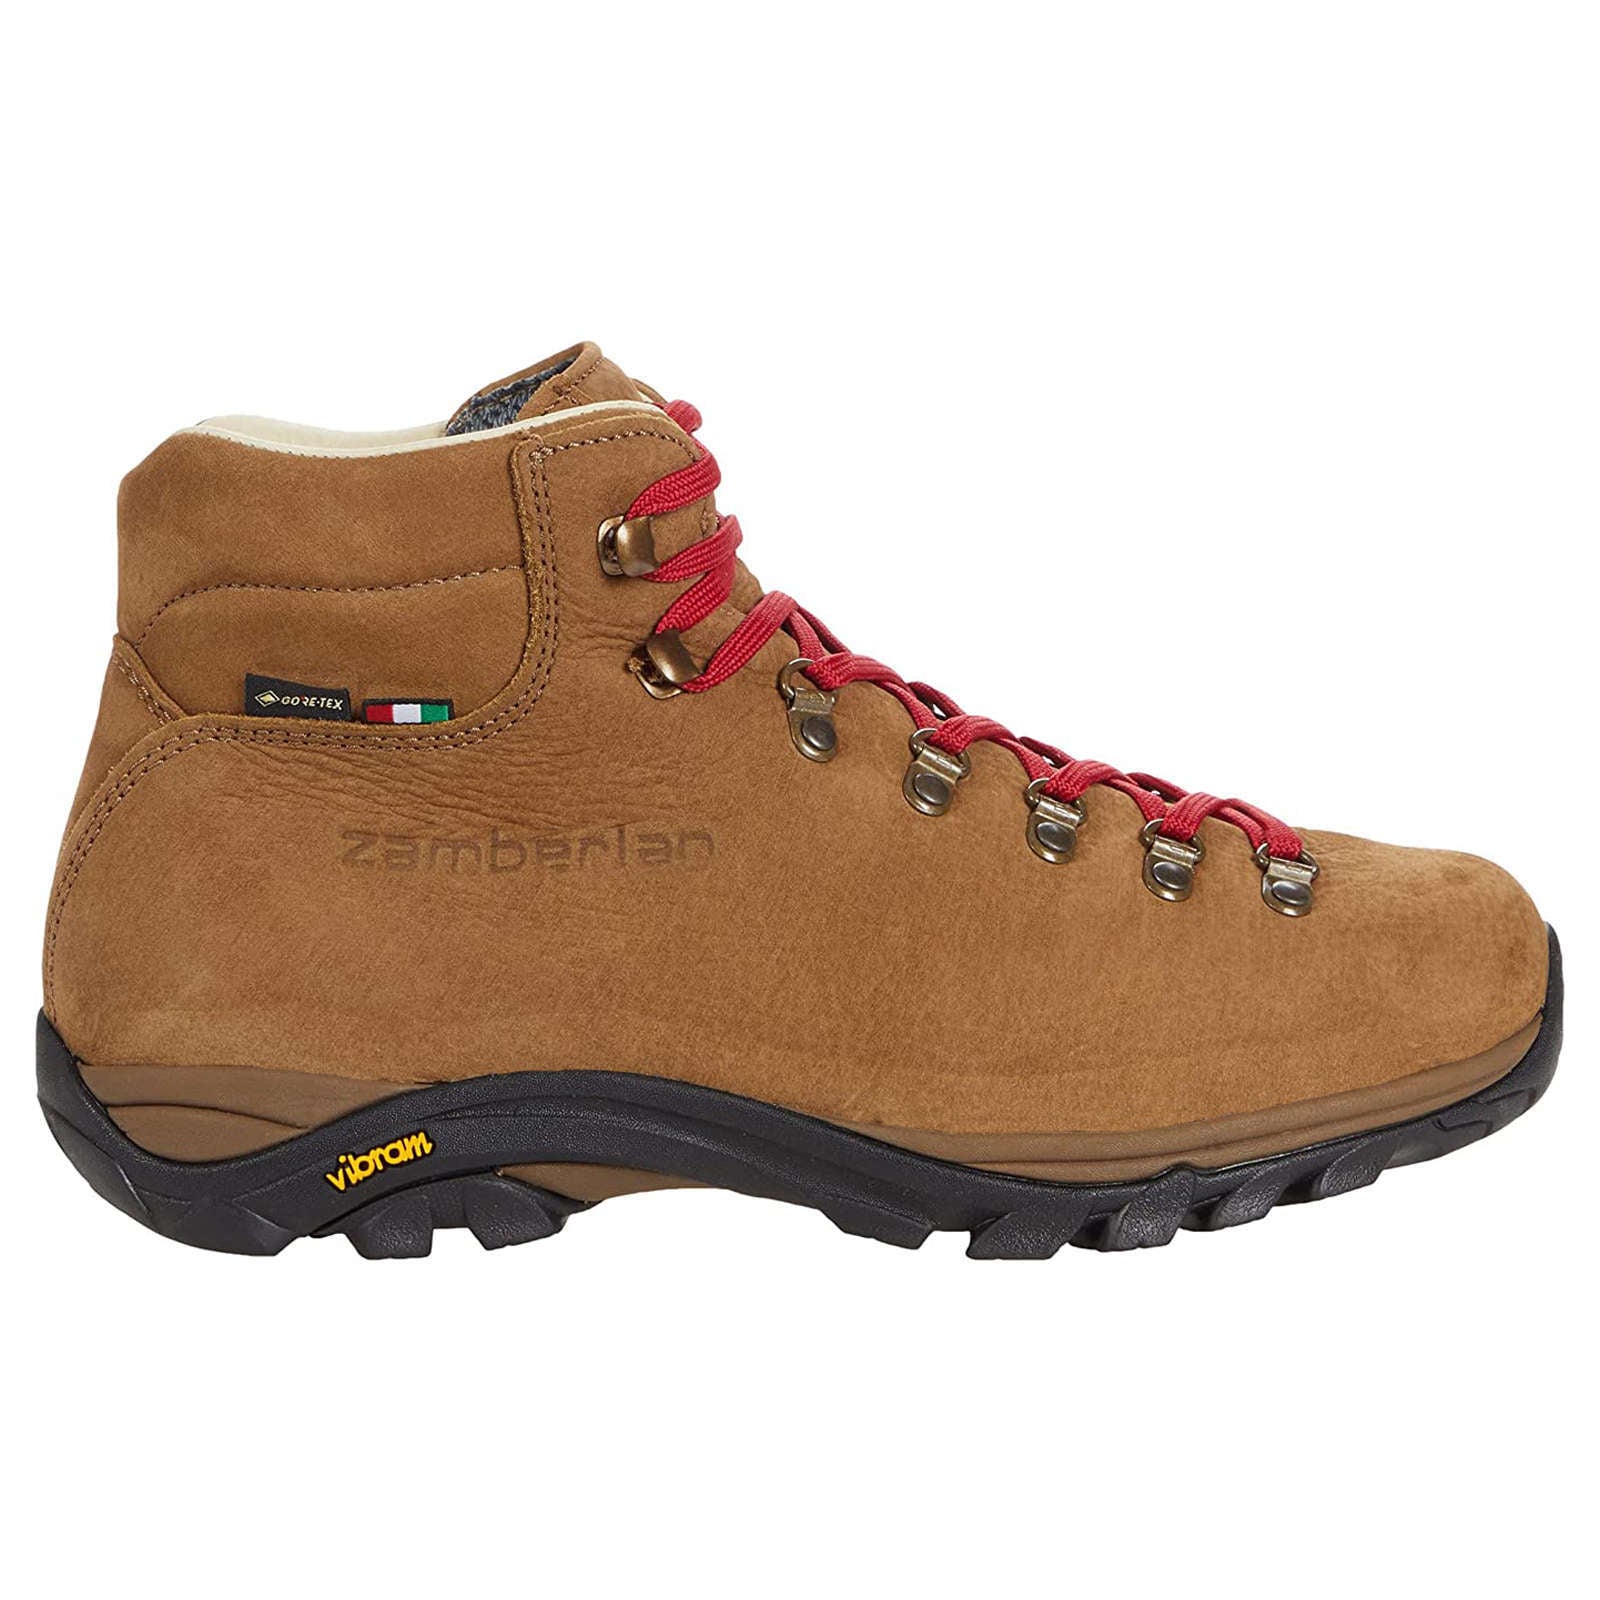 Zamberlan 321 New Trail Lite Evo LTH Nubuck Leather Women's Hiking Boots#color_brown